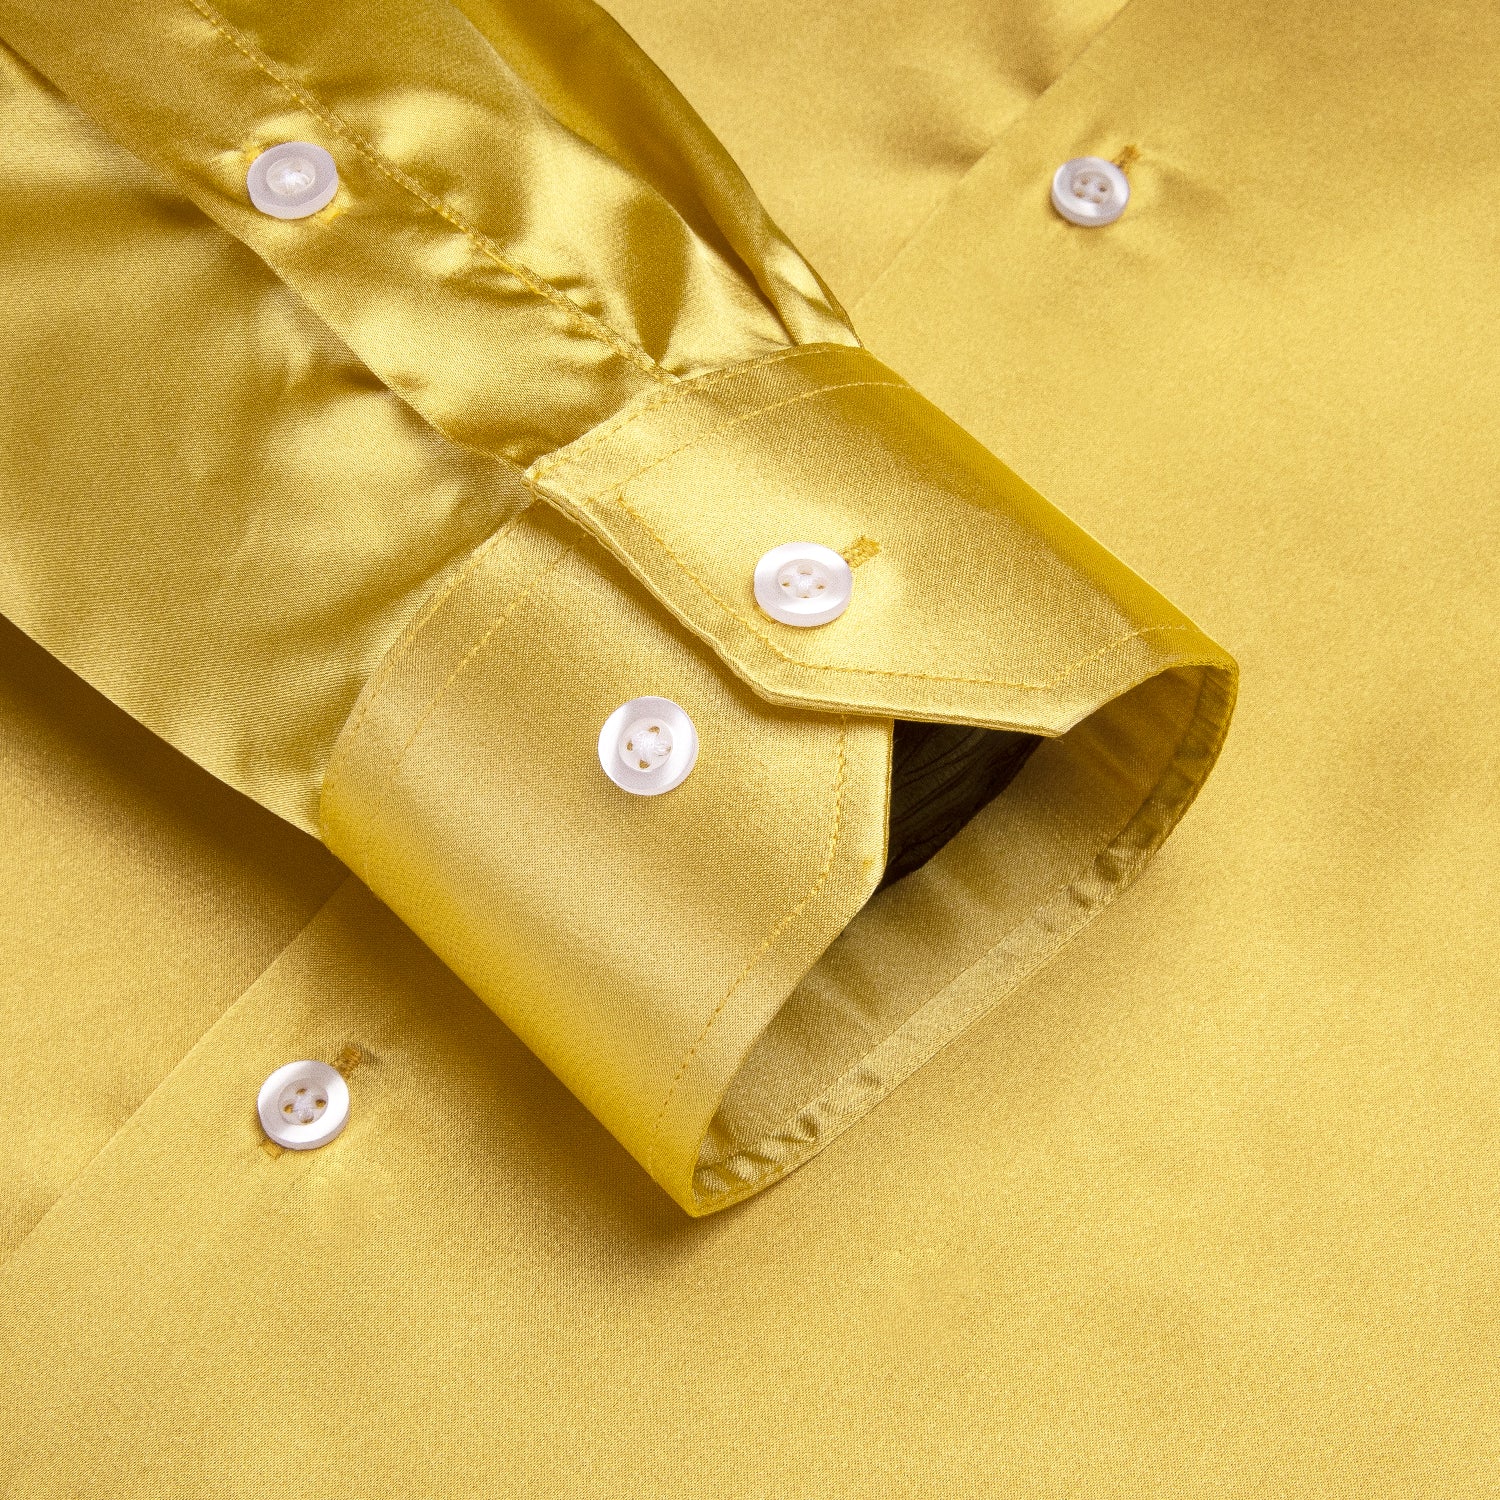 Yellow Solid Satin Silk Men's Long Sleeve Dress Shirt